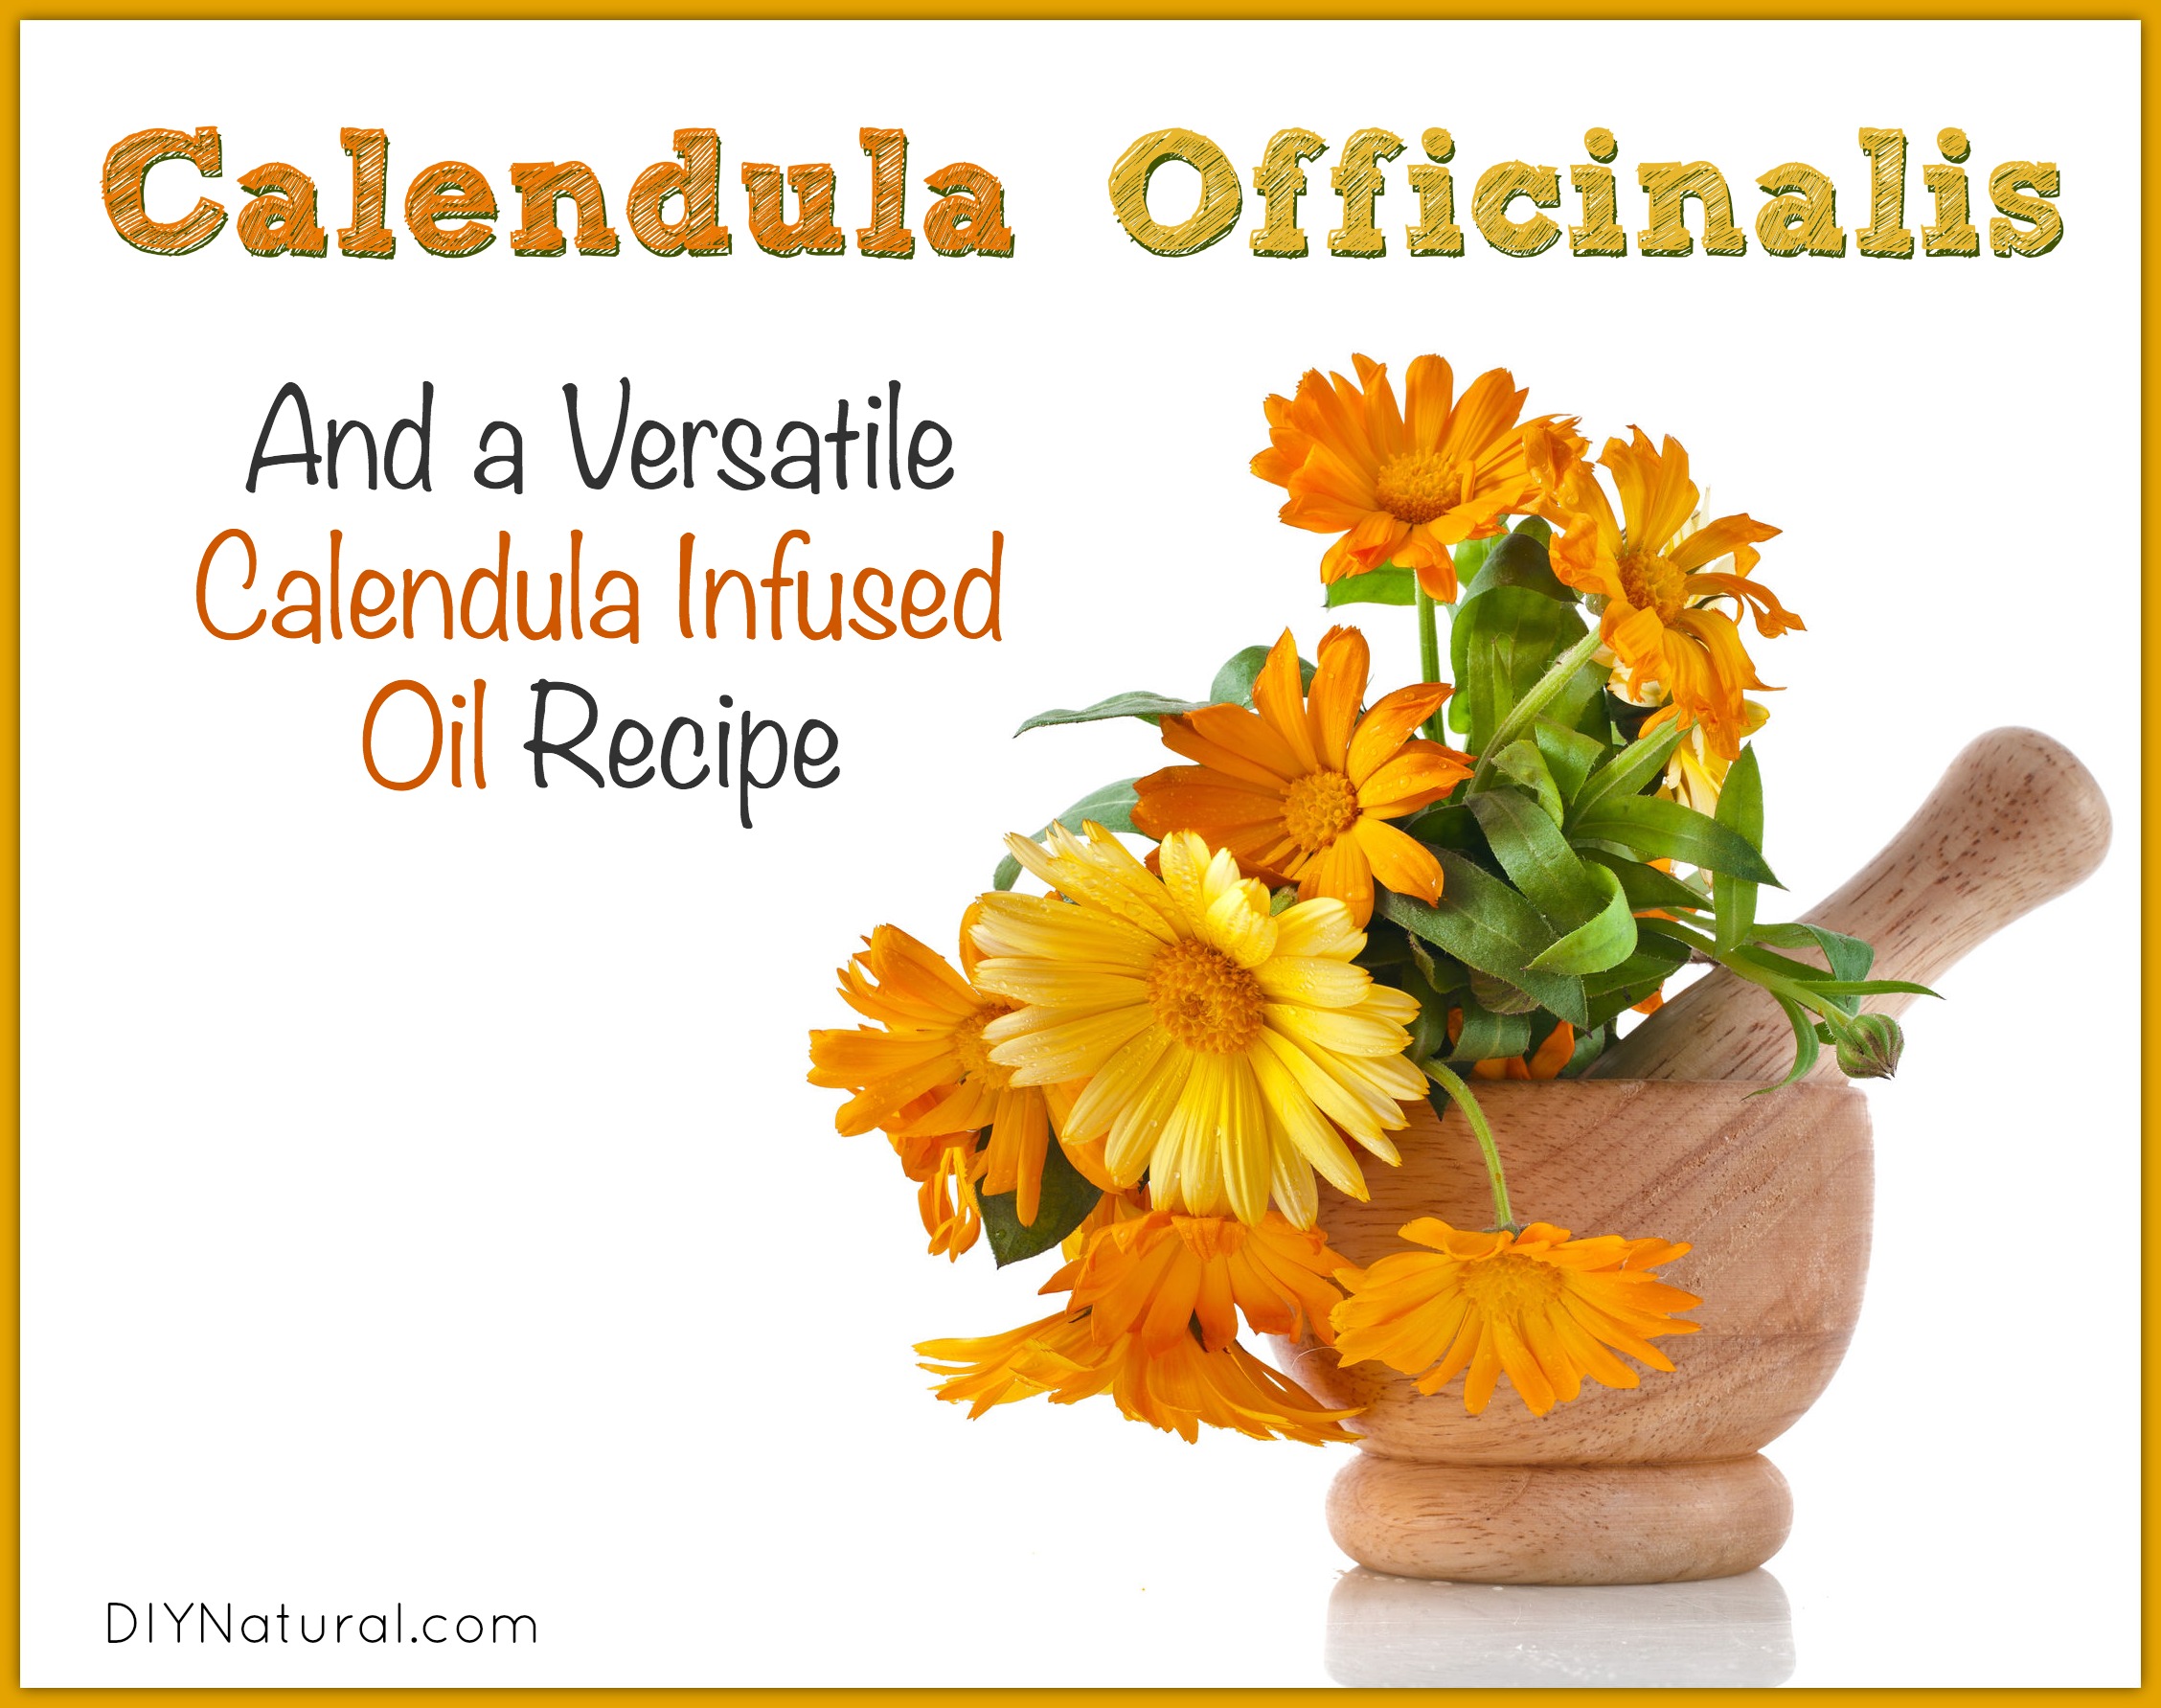 Calendula Officinalis and How To Make Calendula Infused Oil